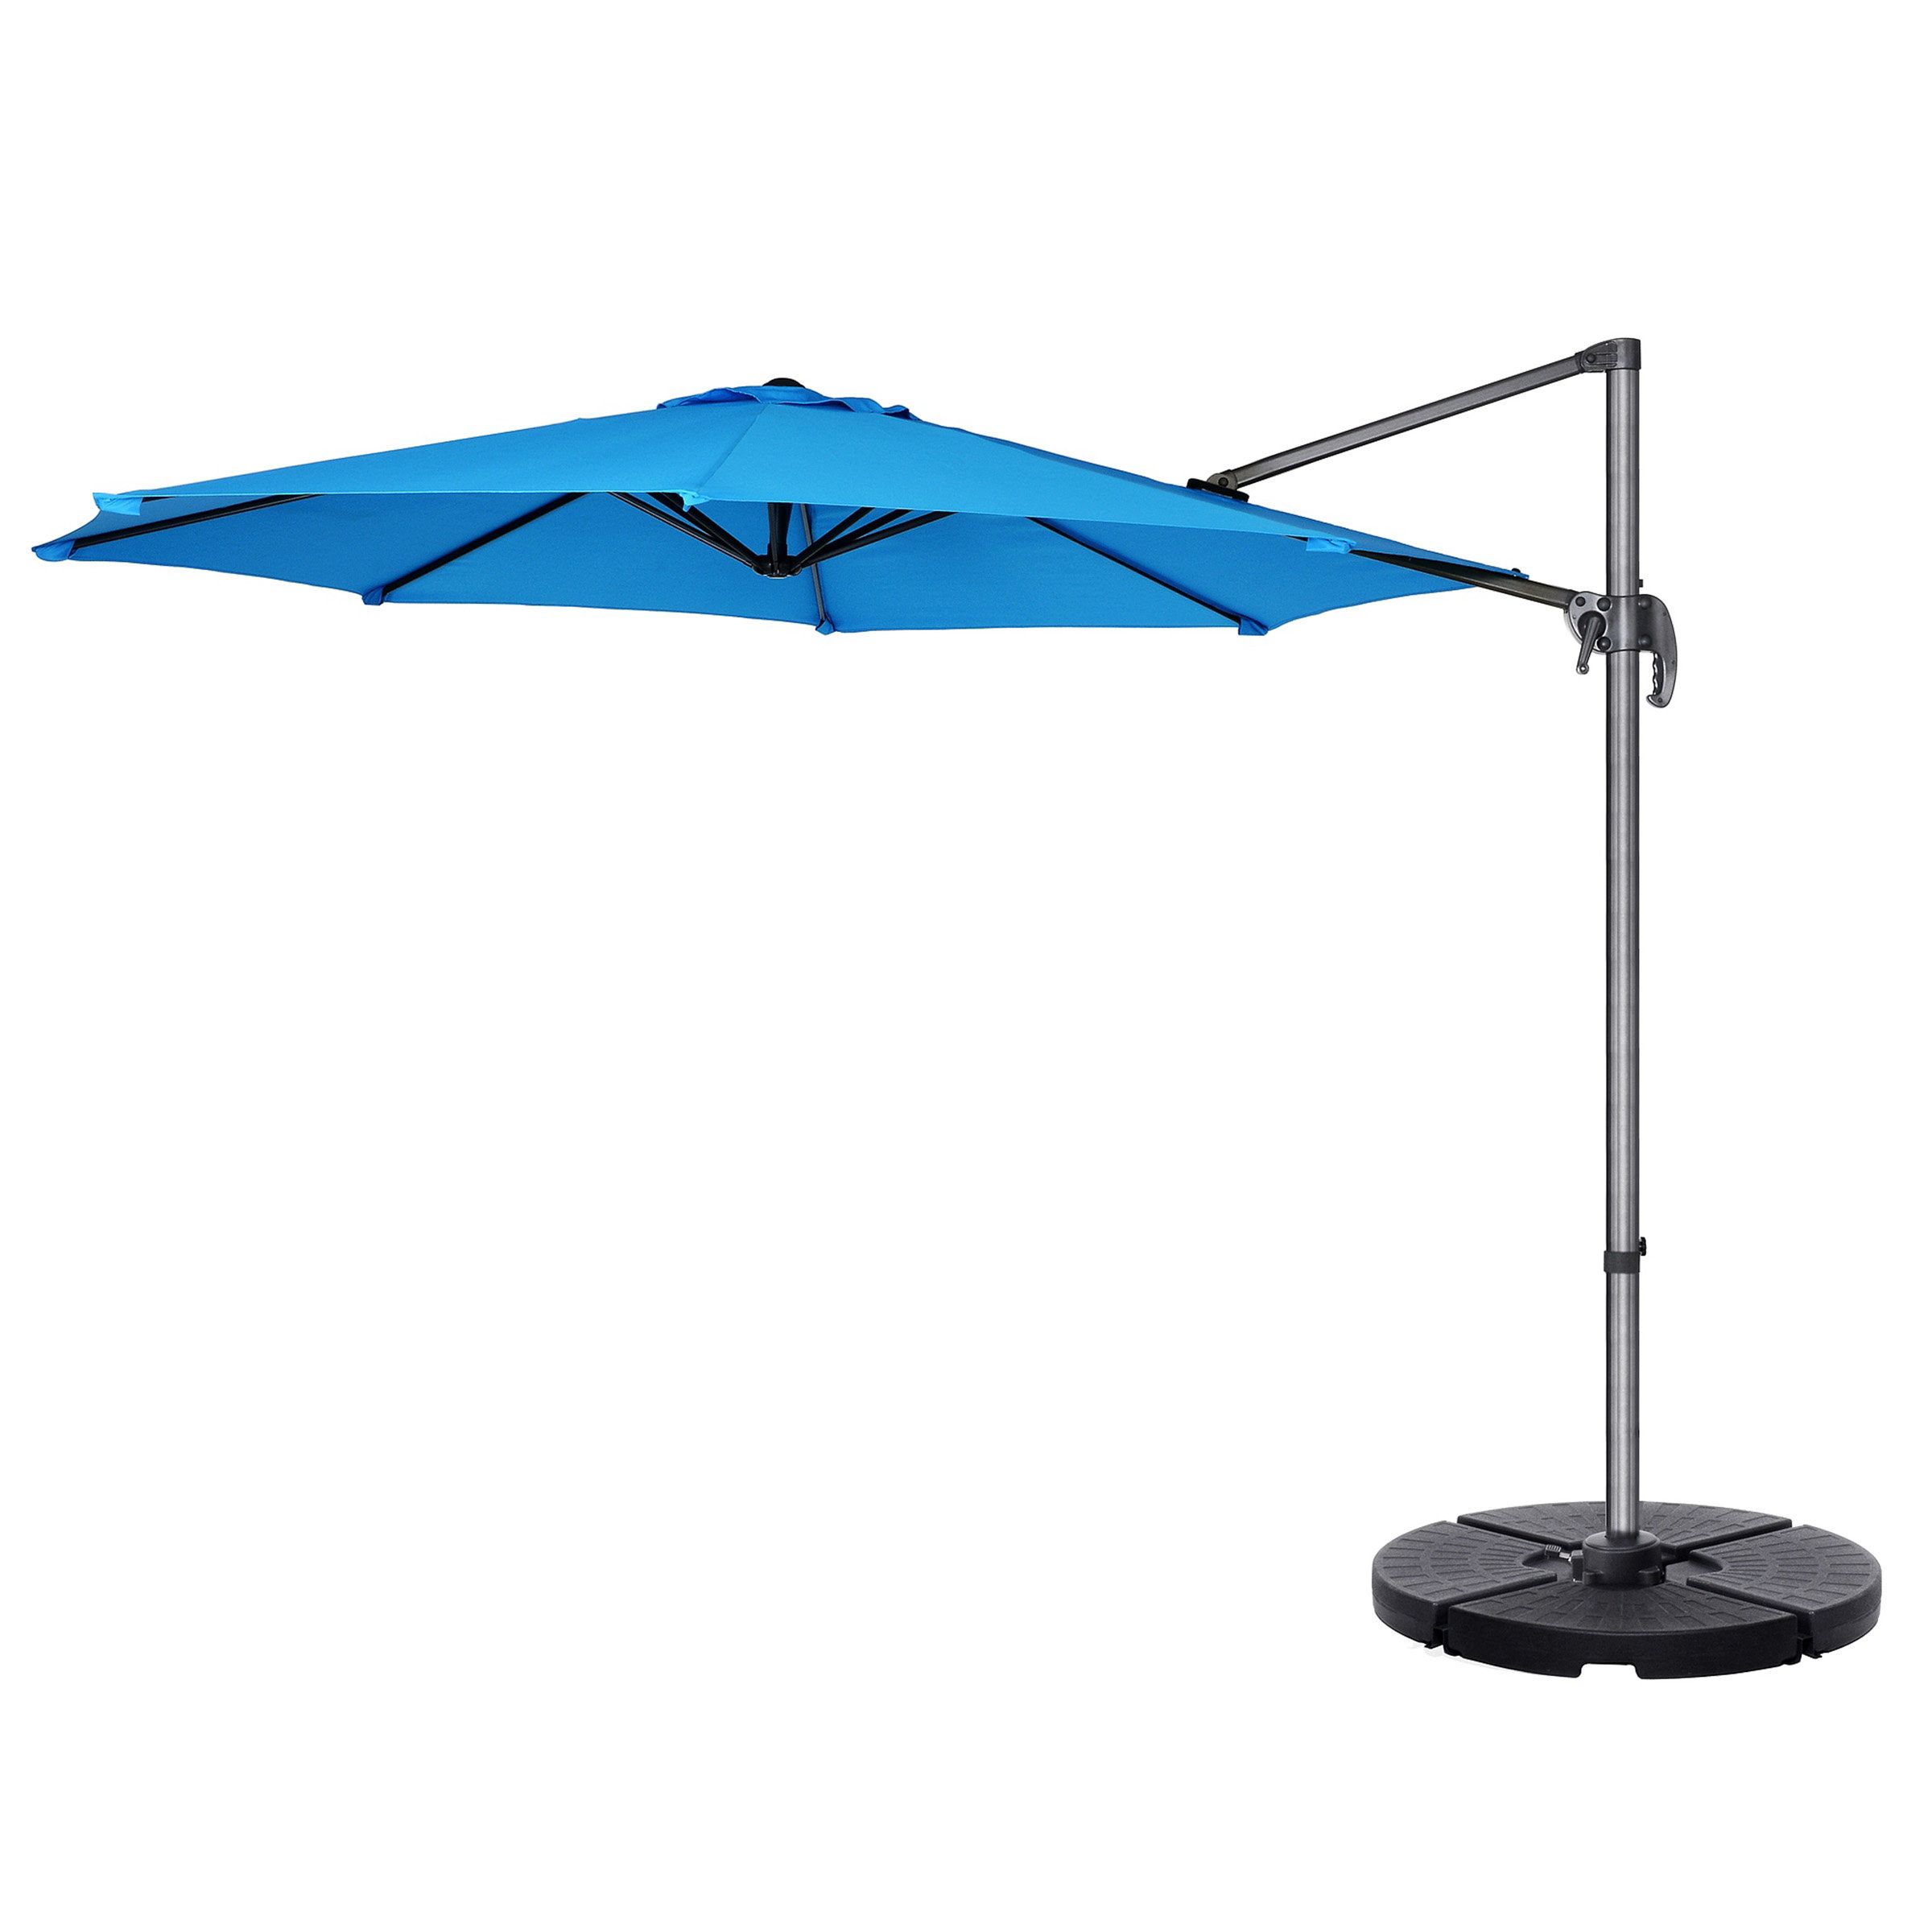 Kedzie Outdoor Cantilever Umbrellas Regarding Preferred Cockermouth Rotating 10' Cantilever Umbrella (View 3 of 20)